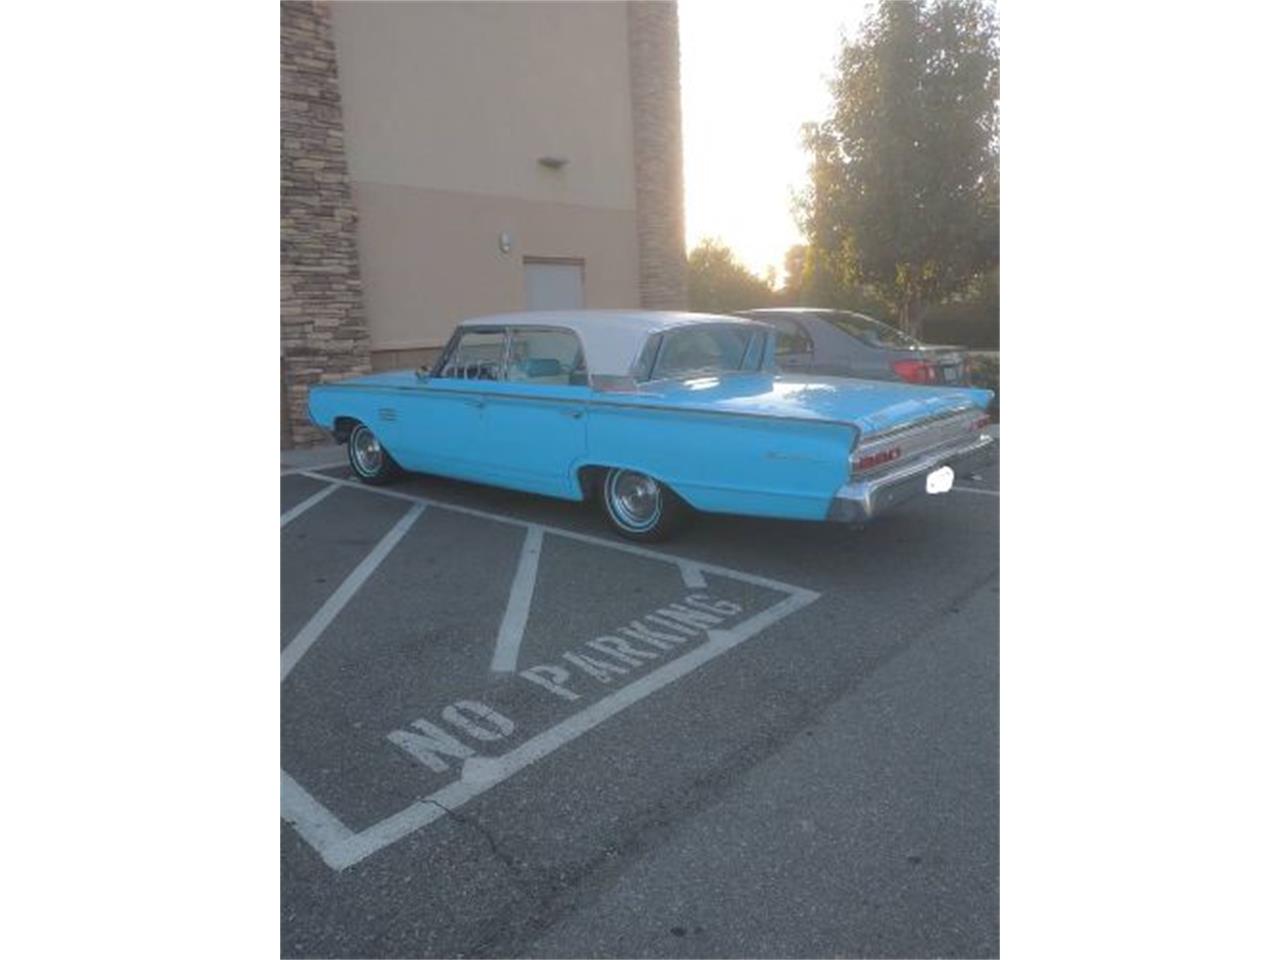 For Sale: 1964 Mercury Monterey in Cadillac, Michigan for sale in Cadillac, MI